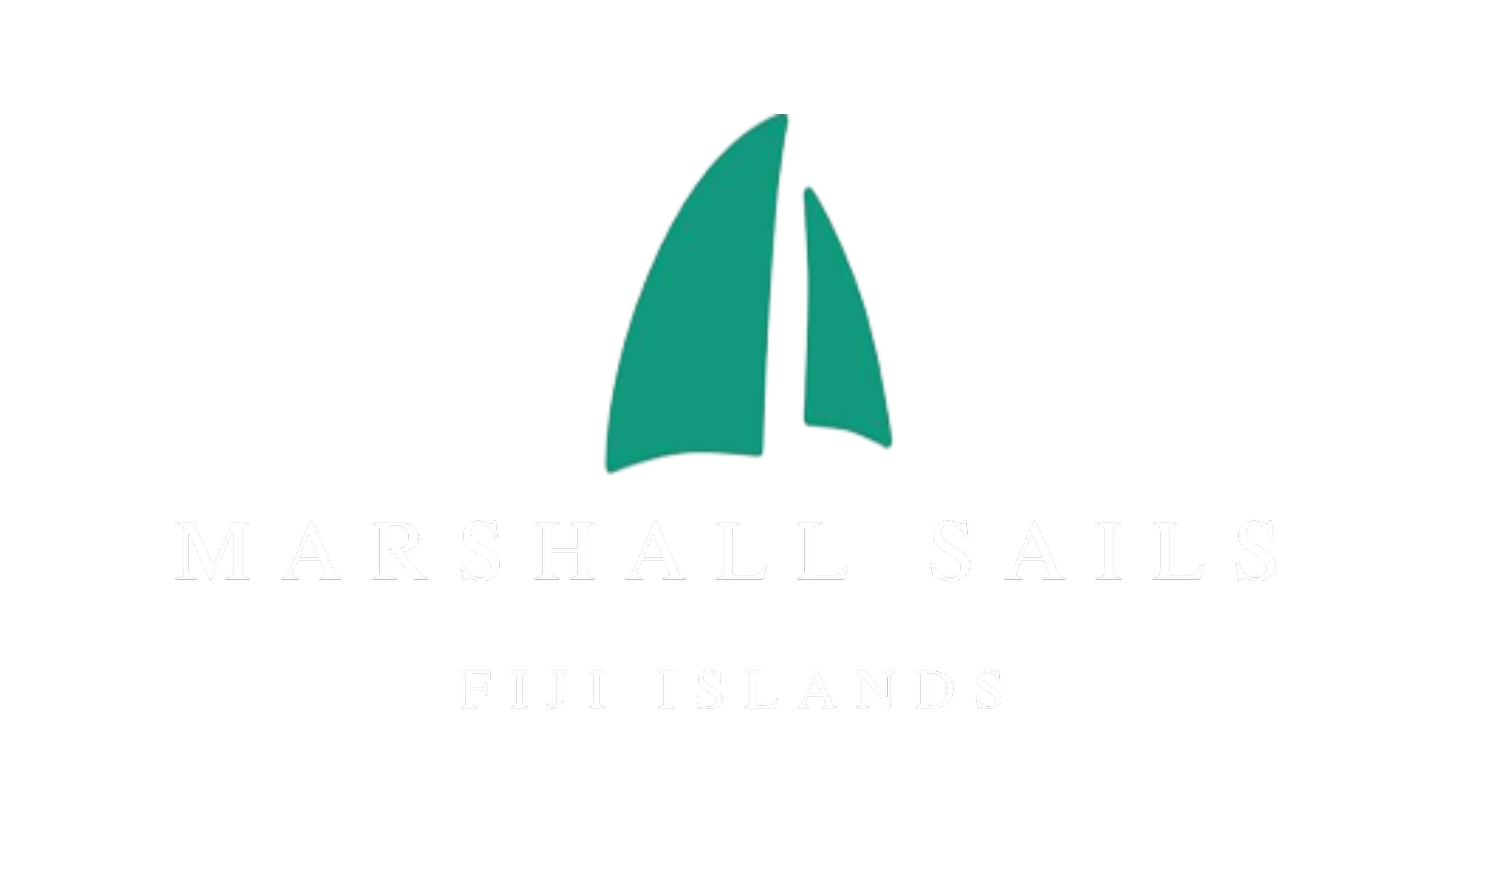 Marshall Sails Limited, Fiji Islands